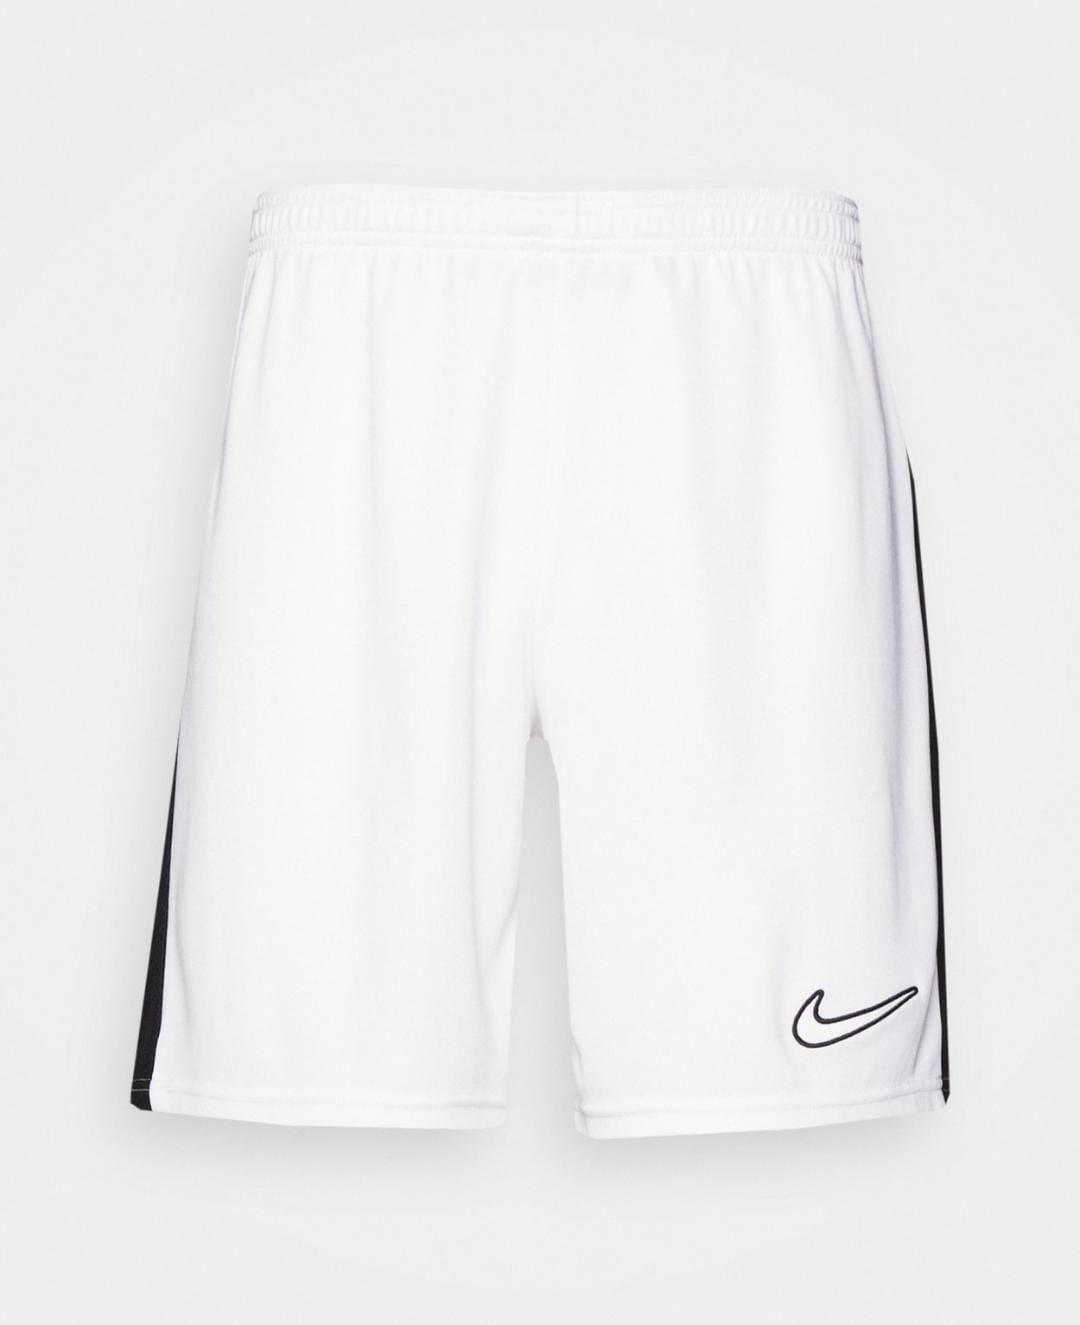 Nike Dri-fit Sports Shorts - White